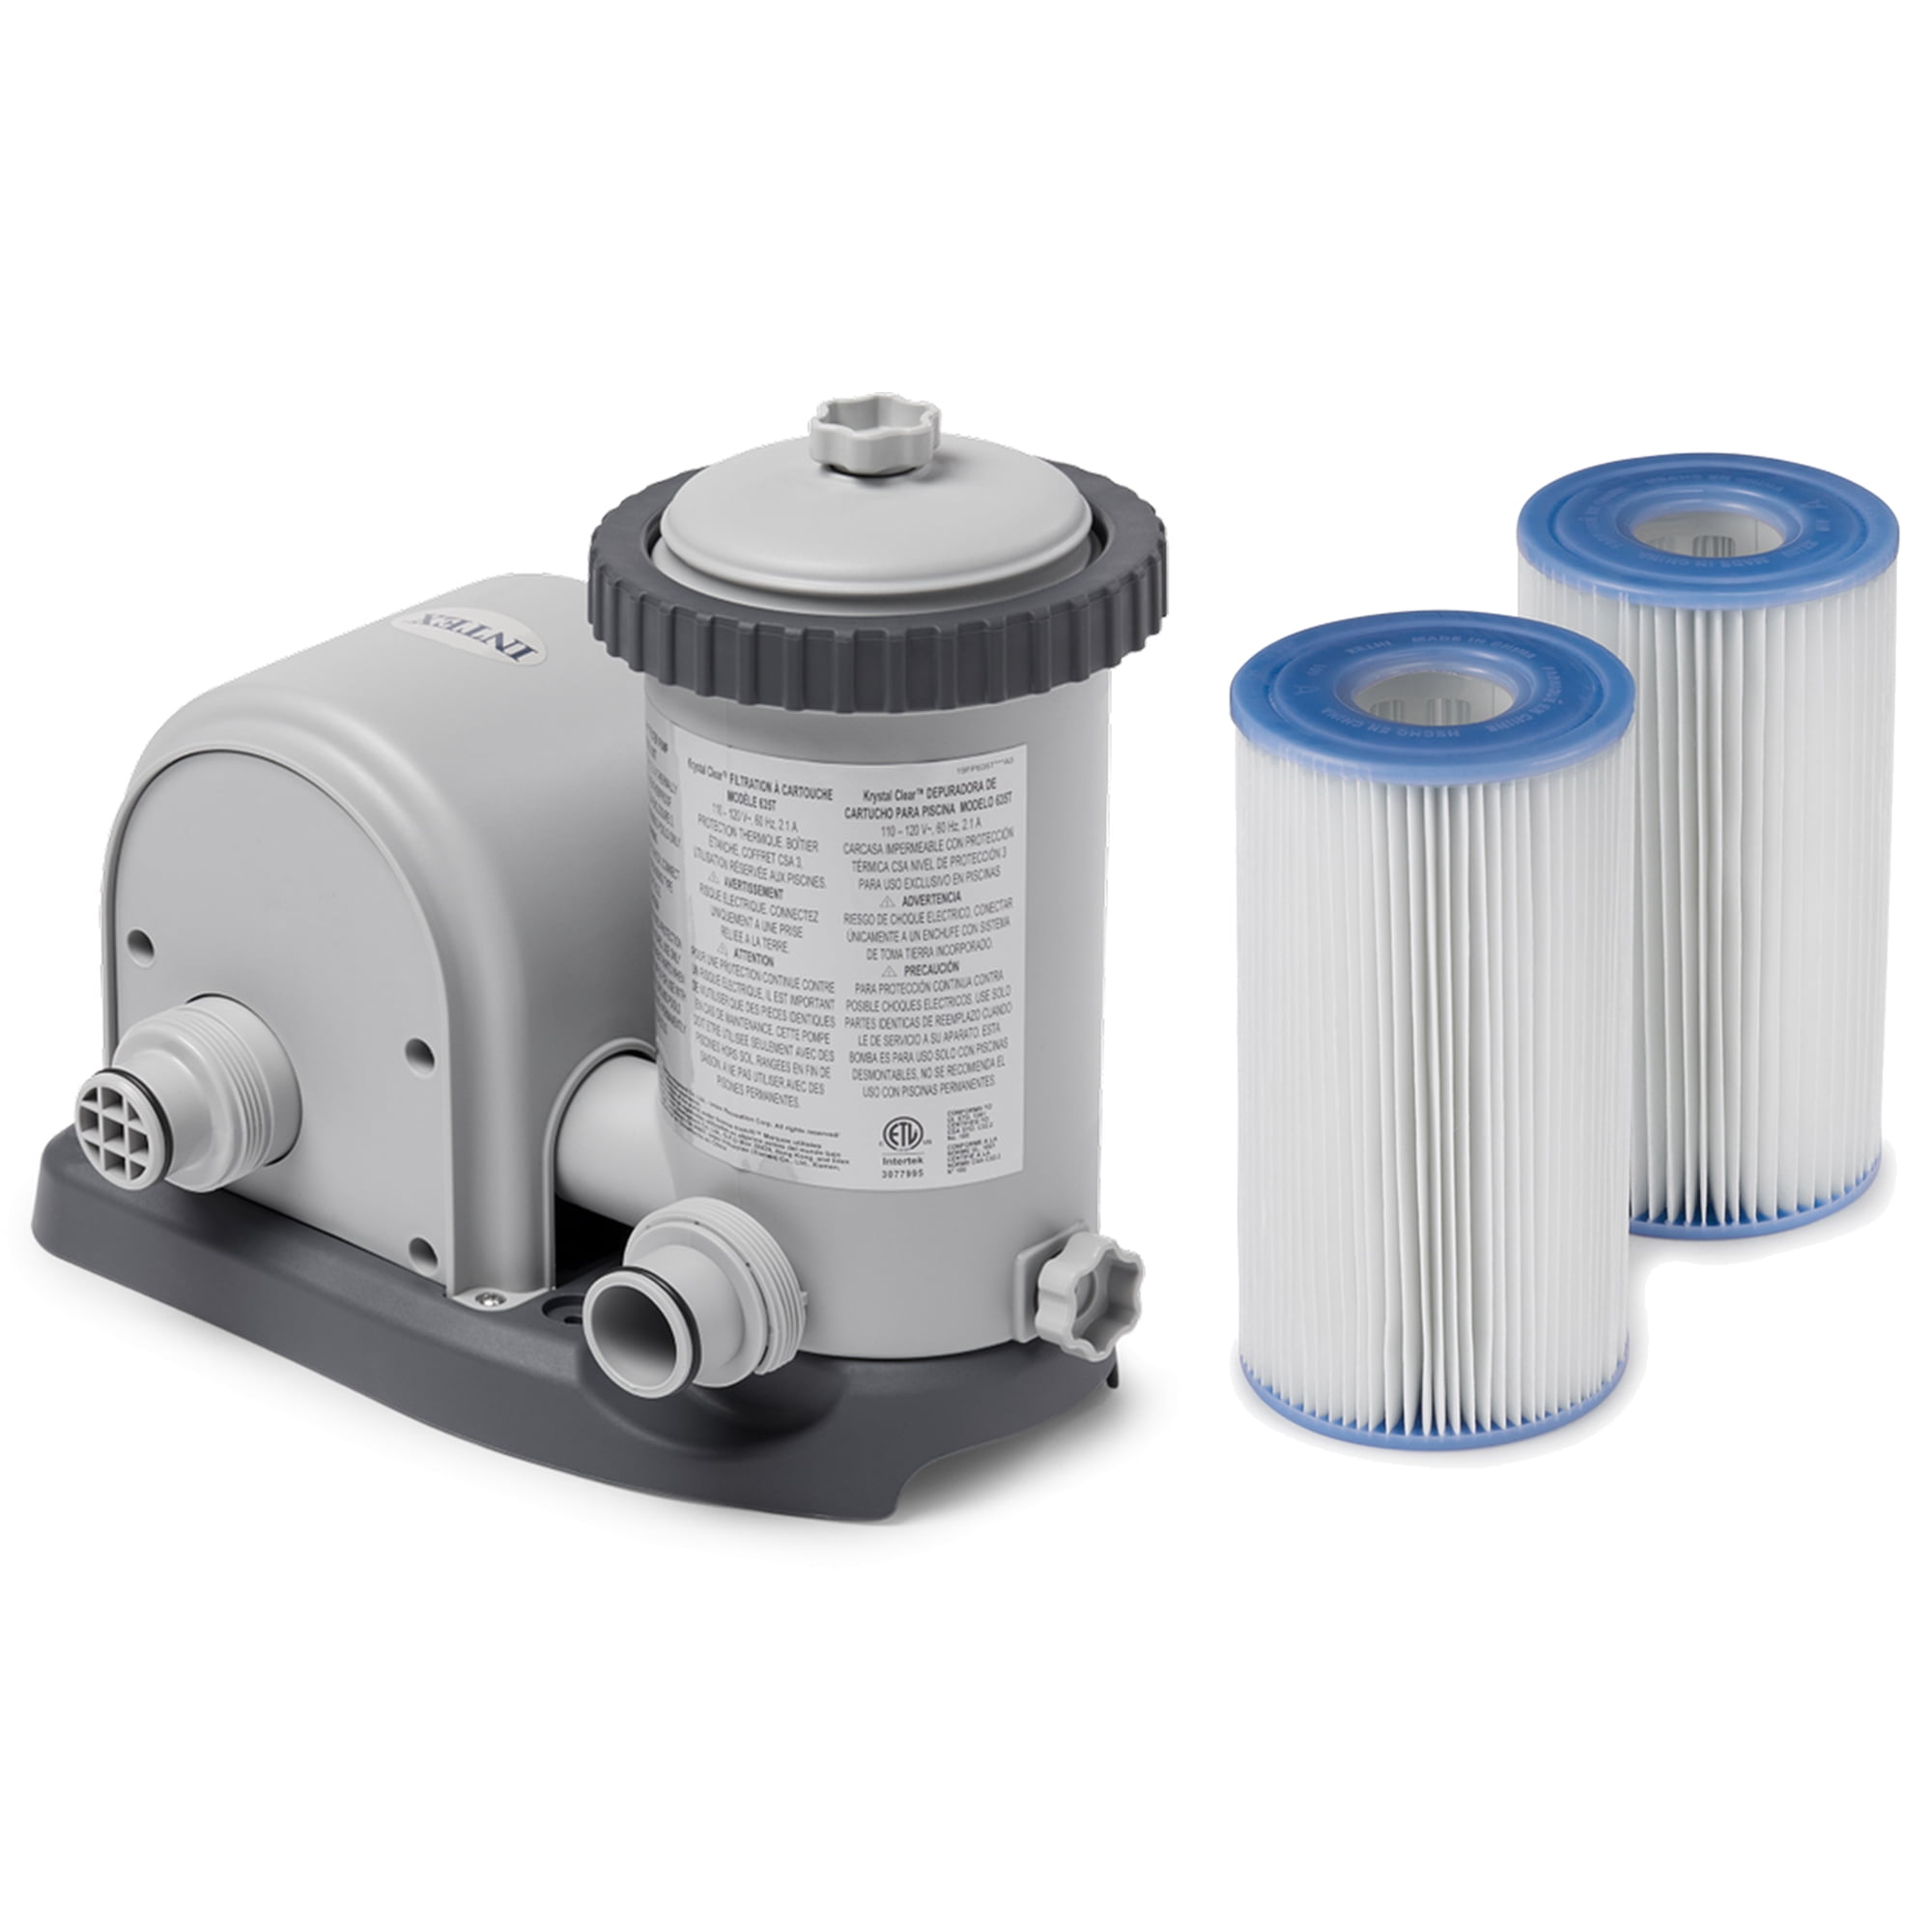 Intex 1500 GPH Easy Set Pool Filter Pump & Type A or C Filter Cartridge (2 Pack)